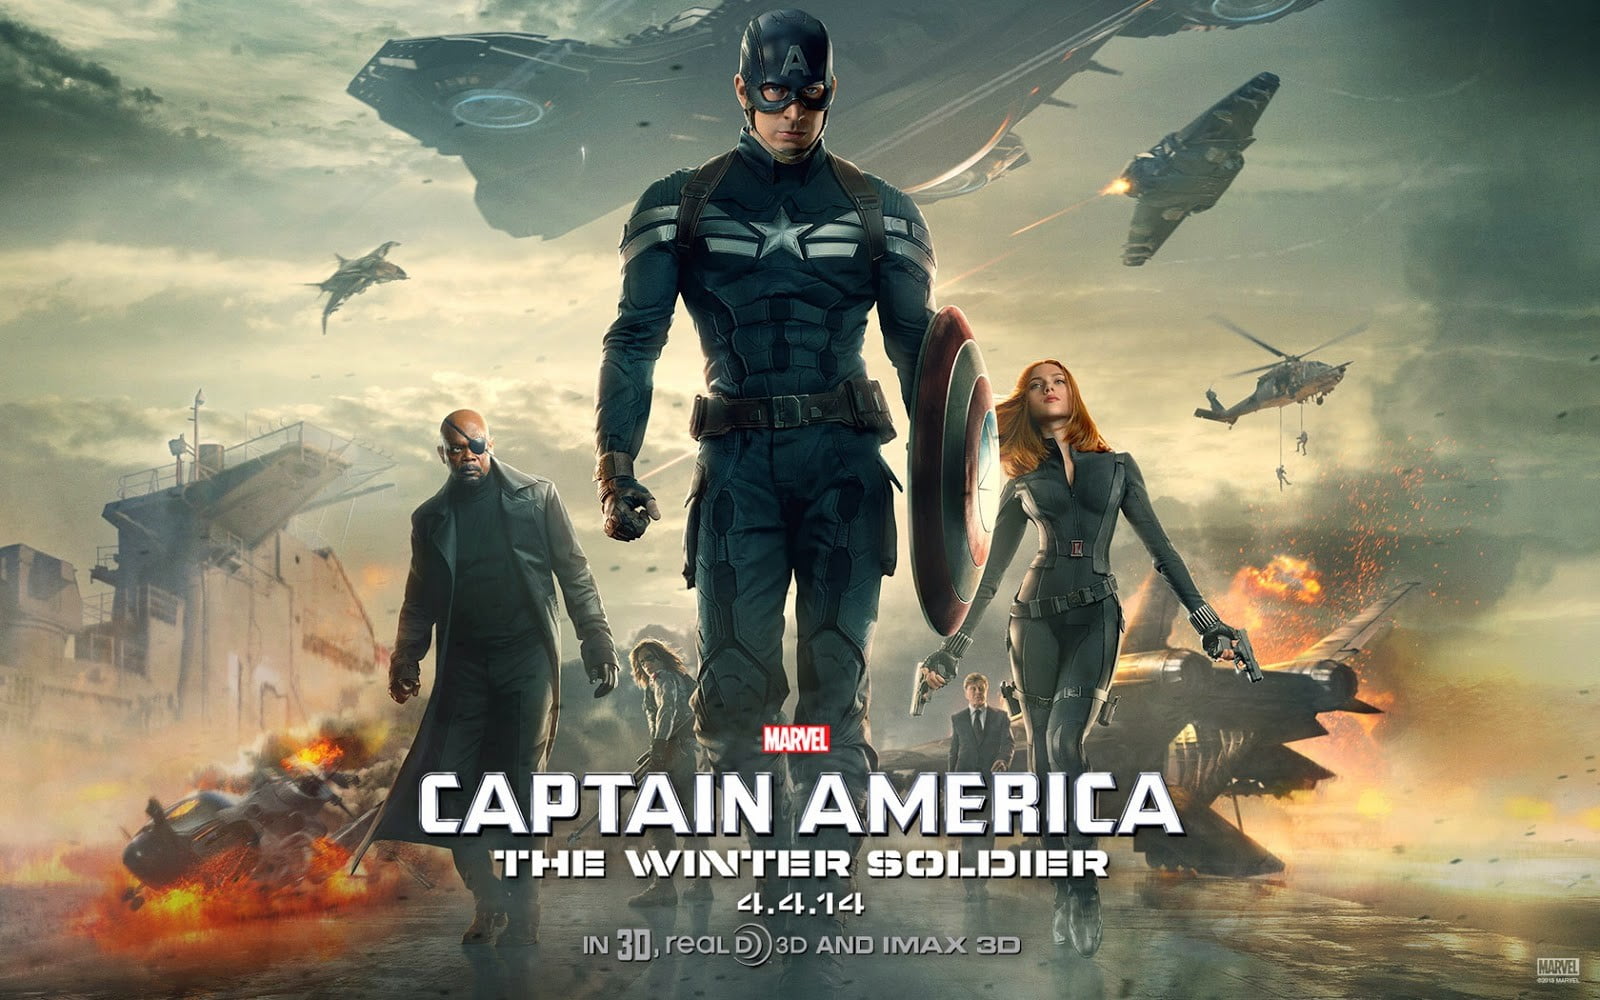 Marvel Captain America The Winter Soldier poster, Captain America: The Winter Soldier, Captain America, Nick Fury, Black Widow